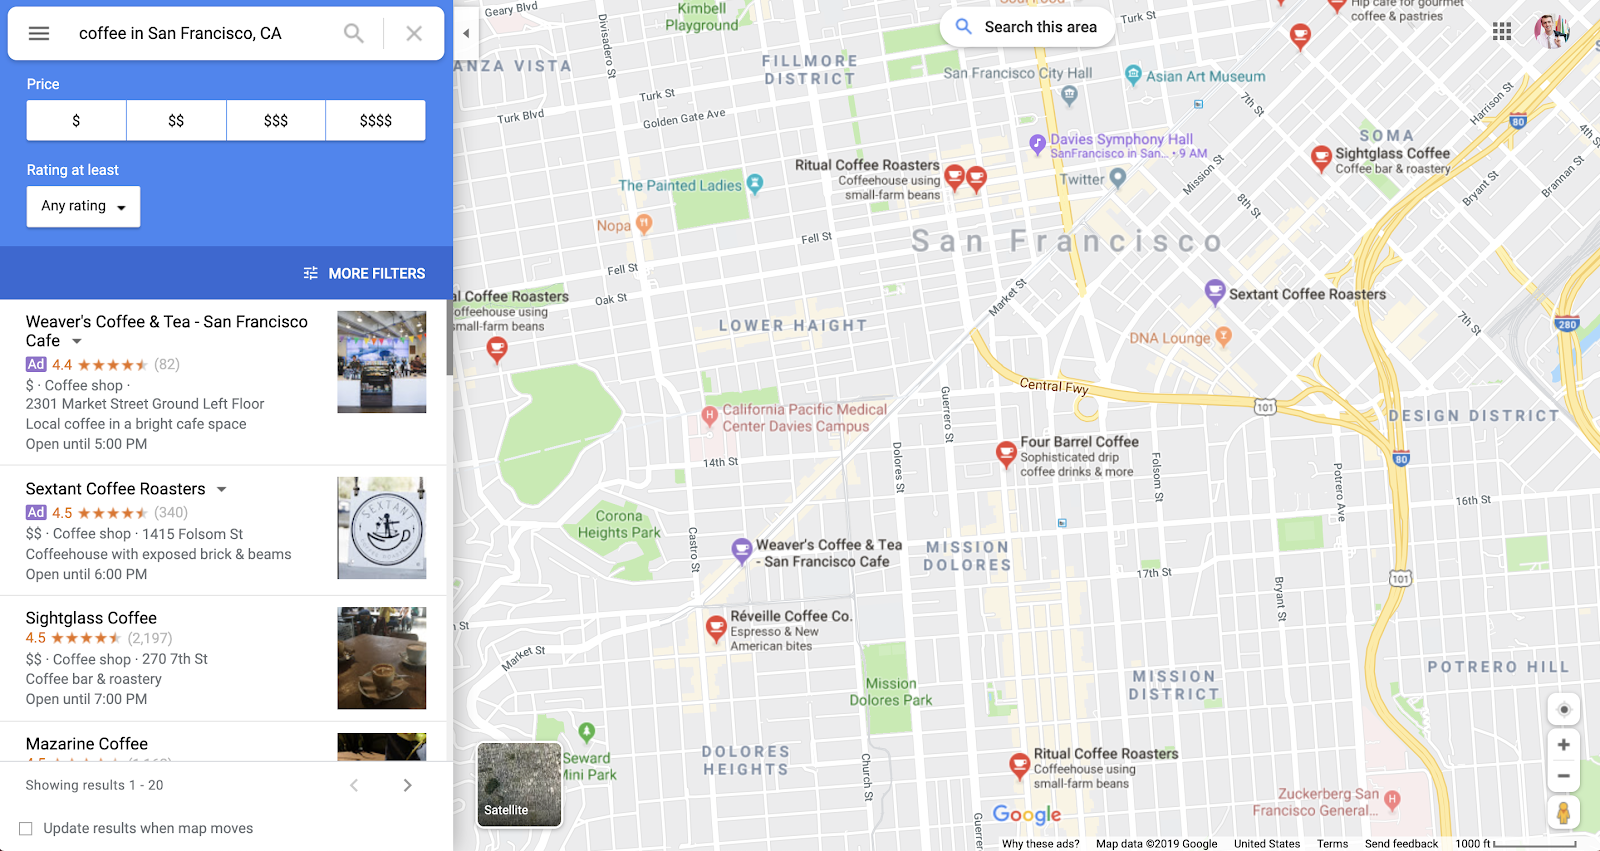 Publicidade online para empresas: exemplo de pins promovidos no Google Maps.